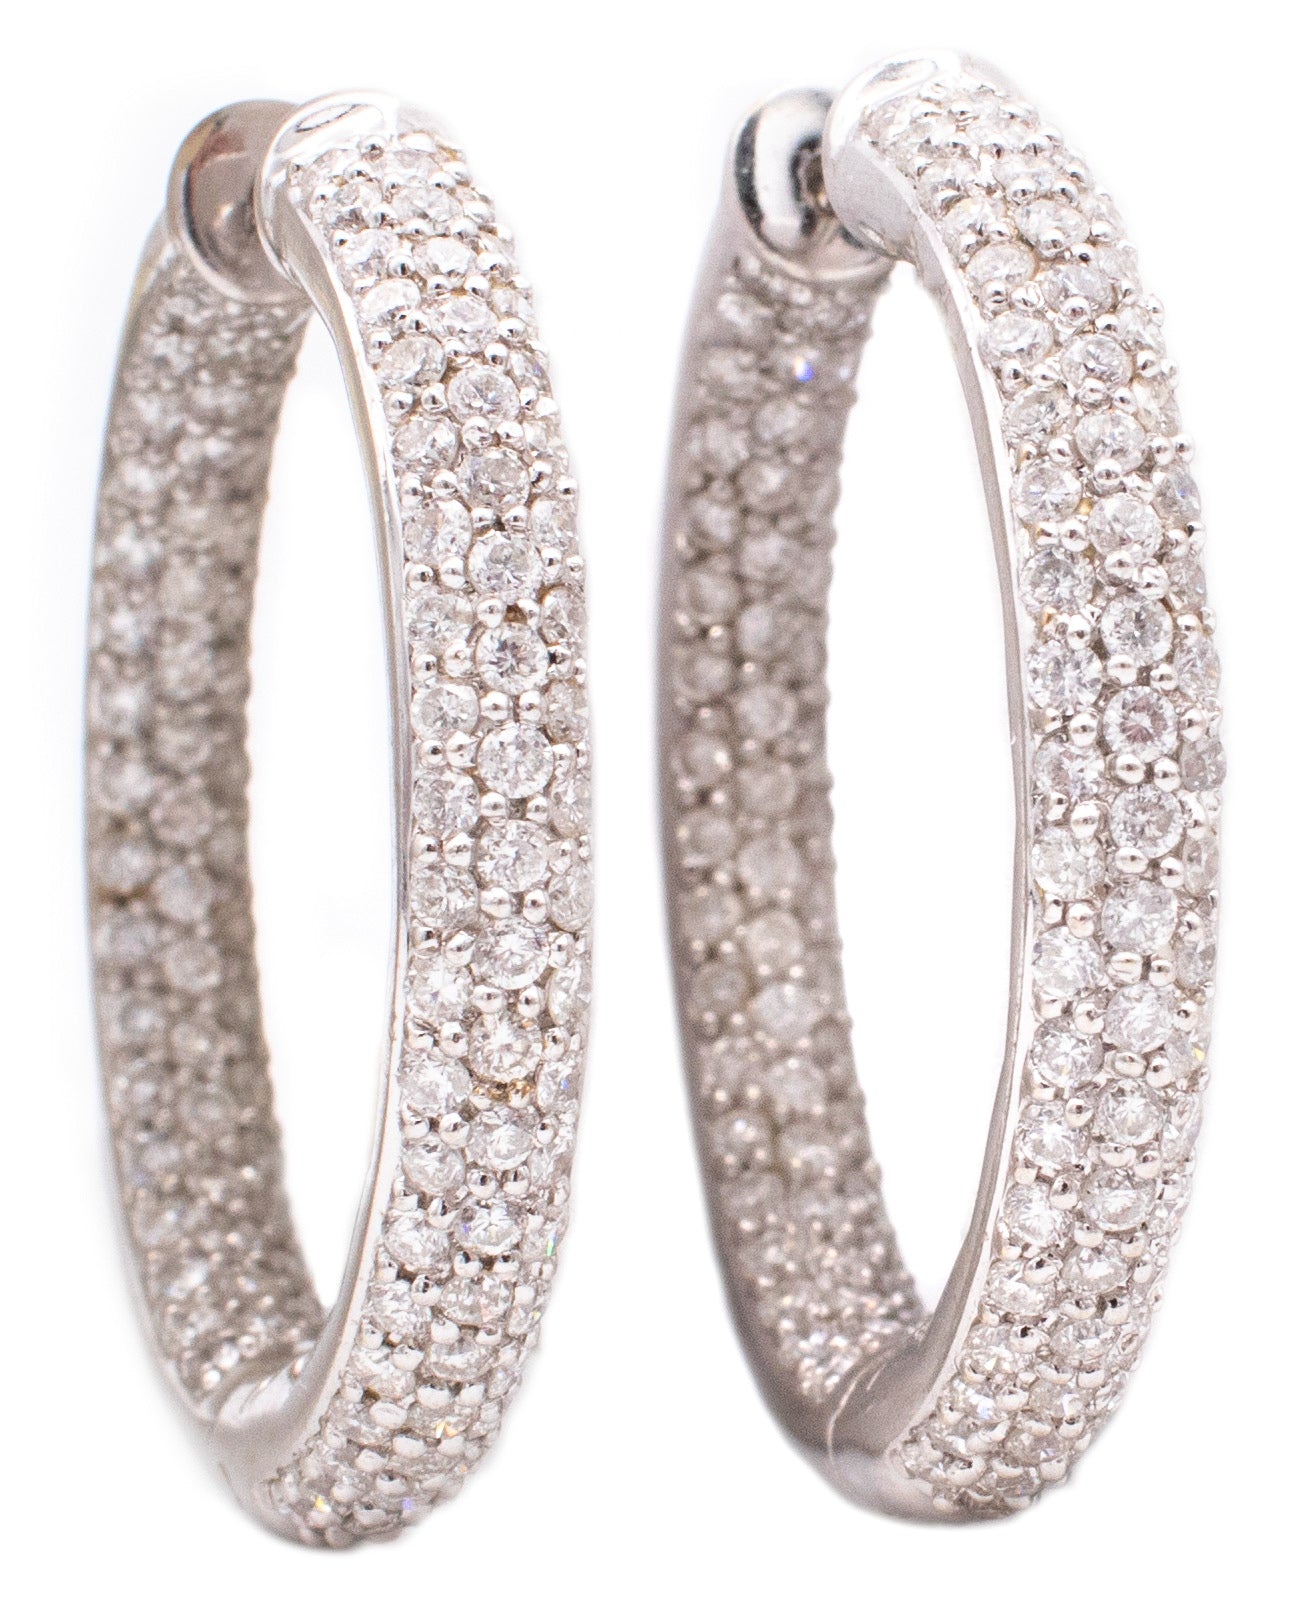 *Modern Italian hoops earrings in 18 kt white golf with 3.56 Cts of vs Diamonds